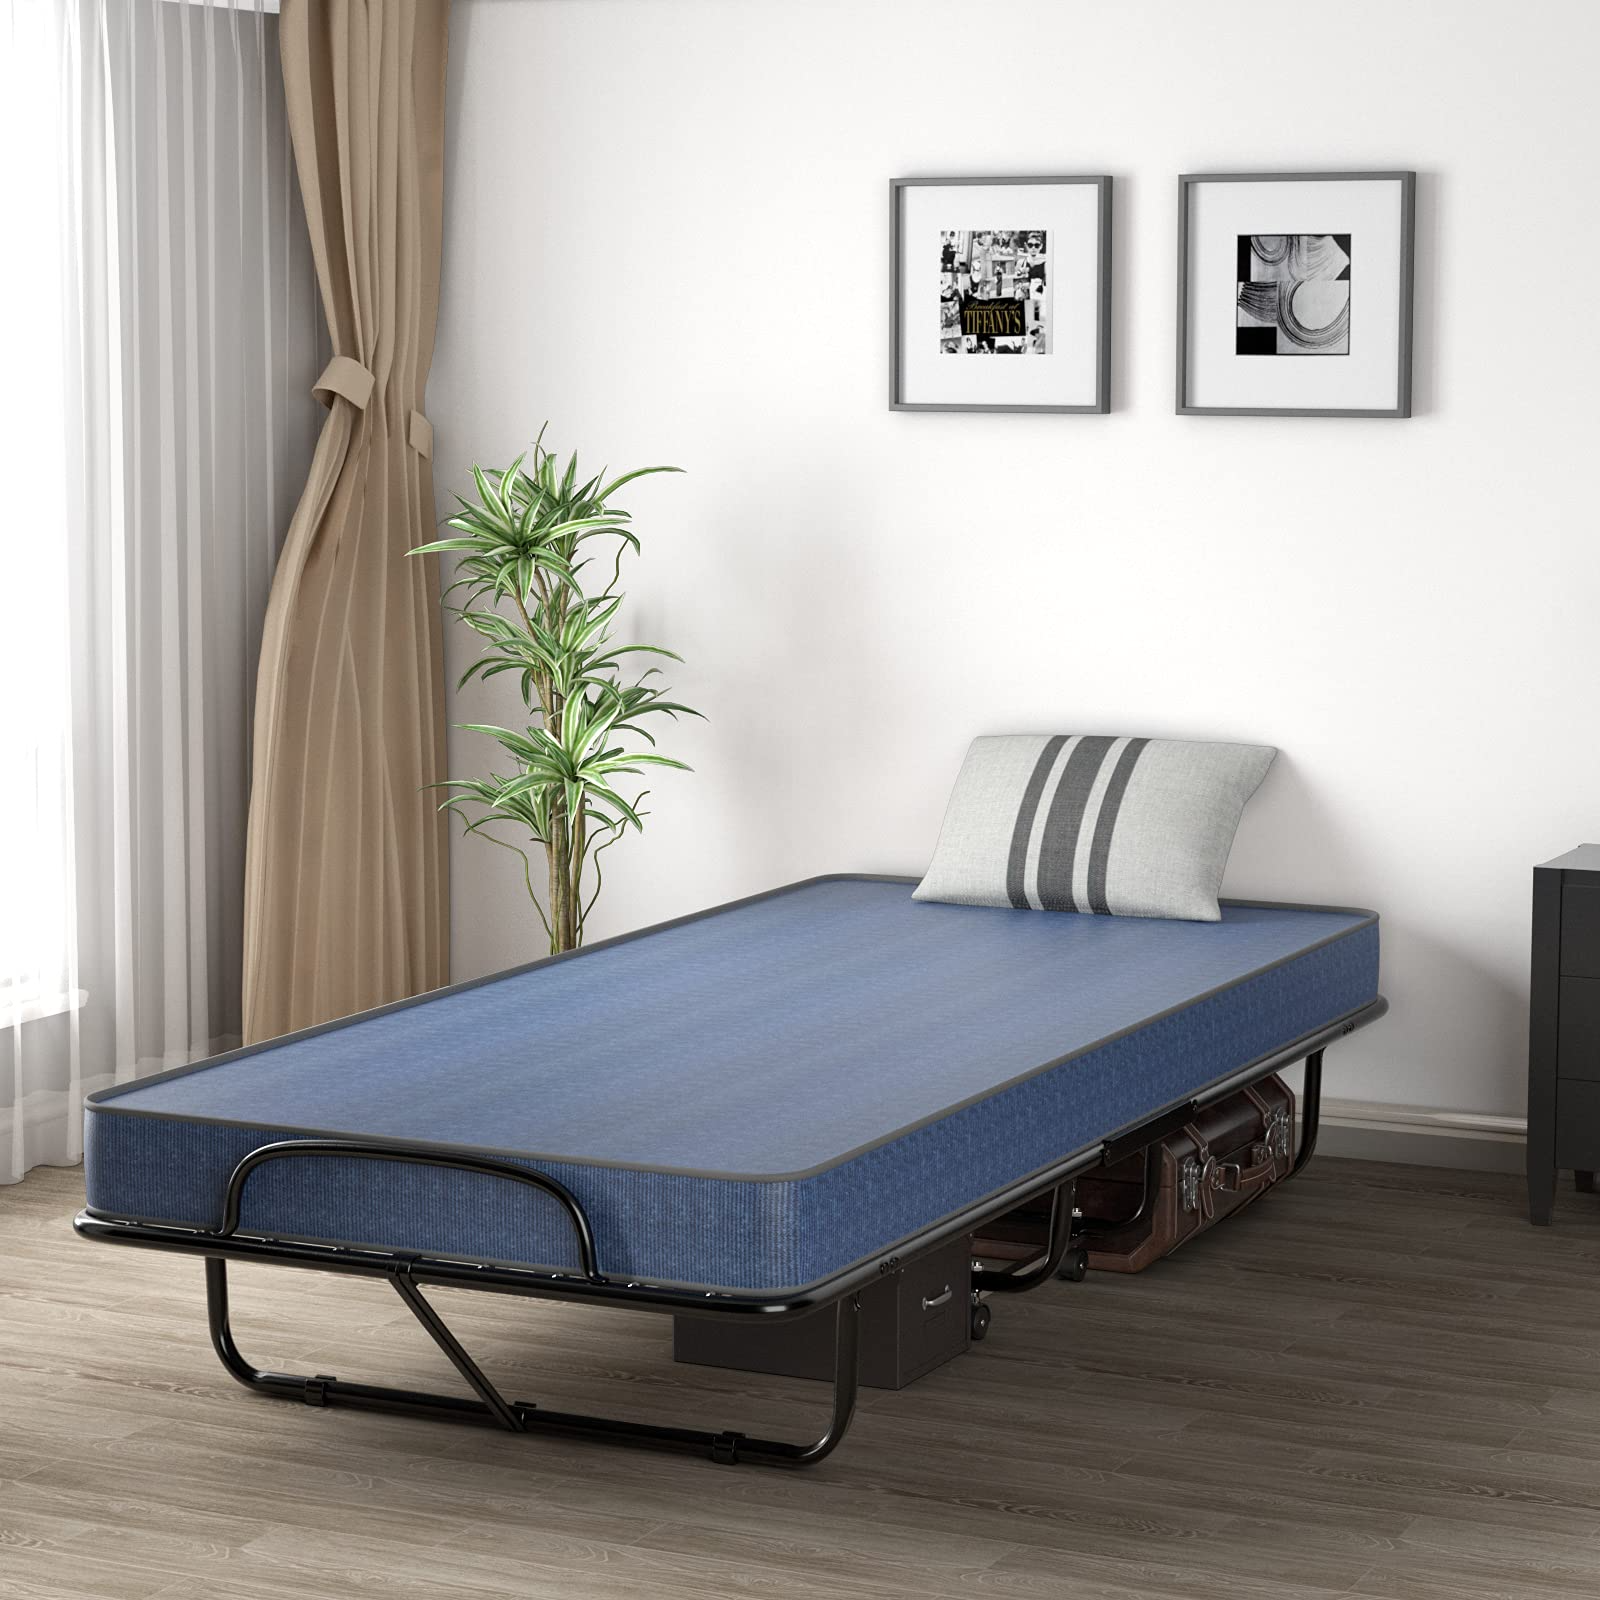 Giantex Rollaway Folding Bed